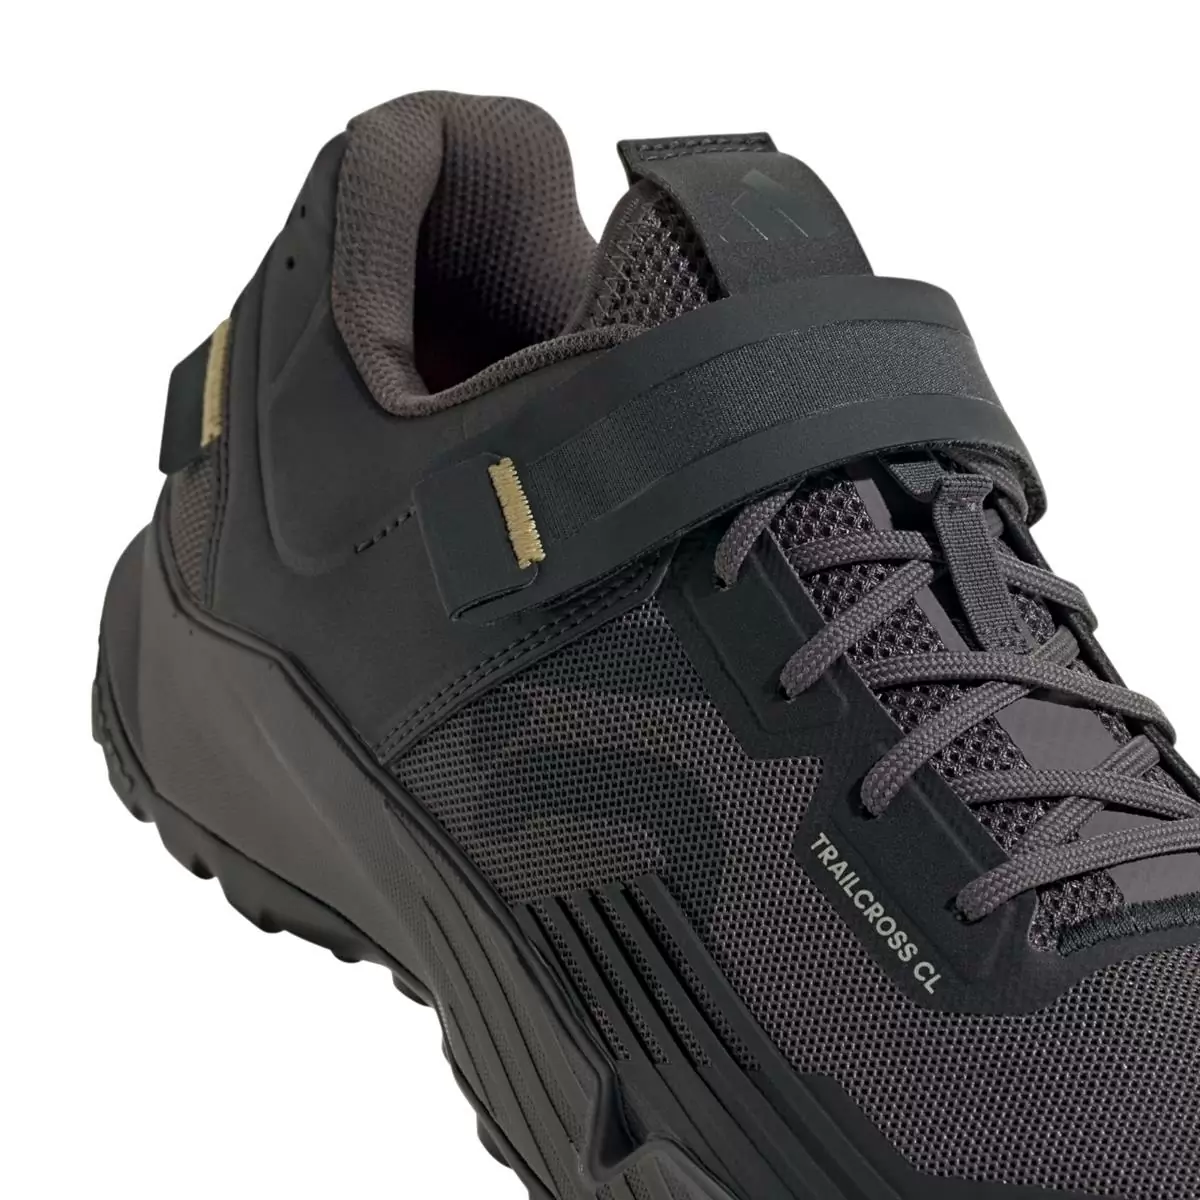 Clip 5.10 Trailcross MTB-Schuhe, Schwarz/Grau/Beige, Größe 38,5 #7